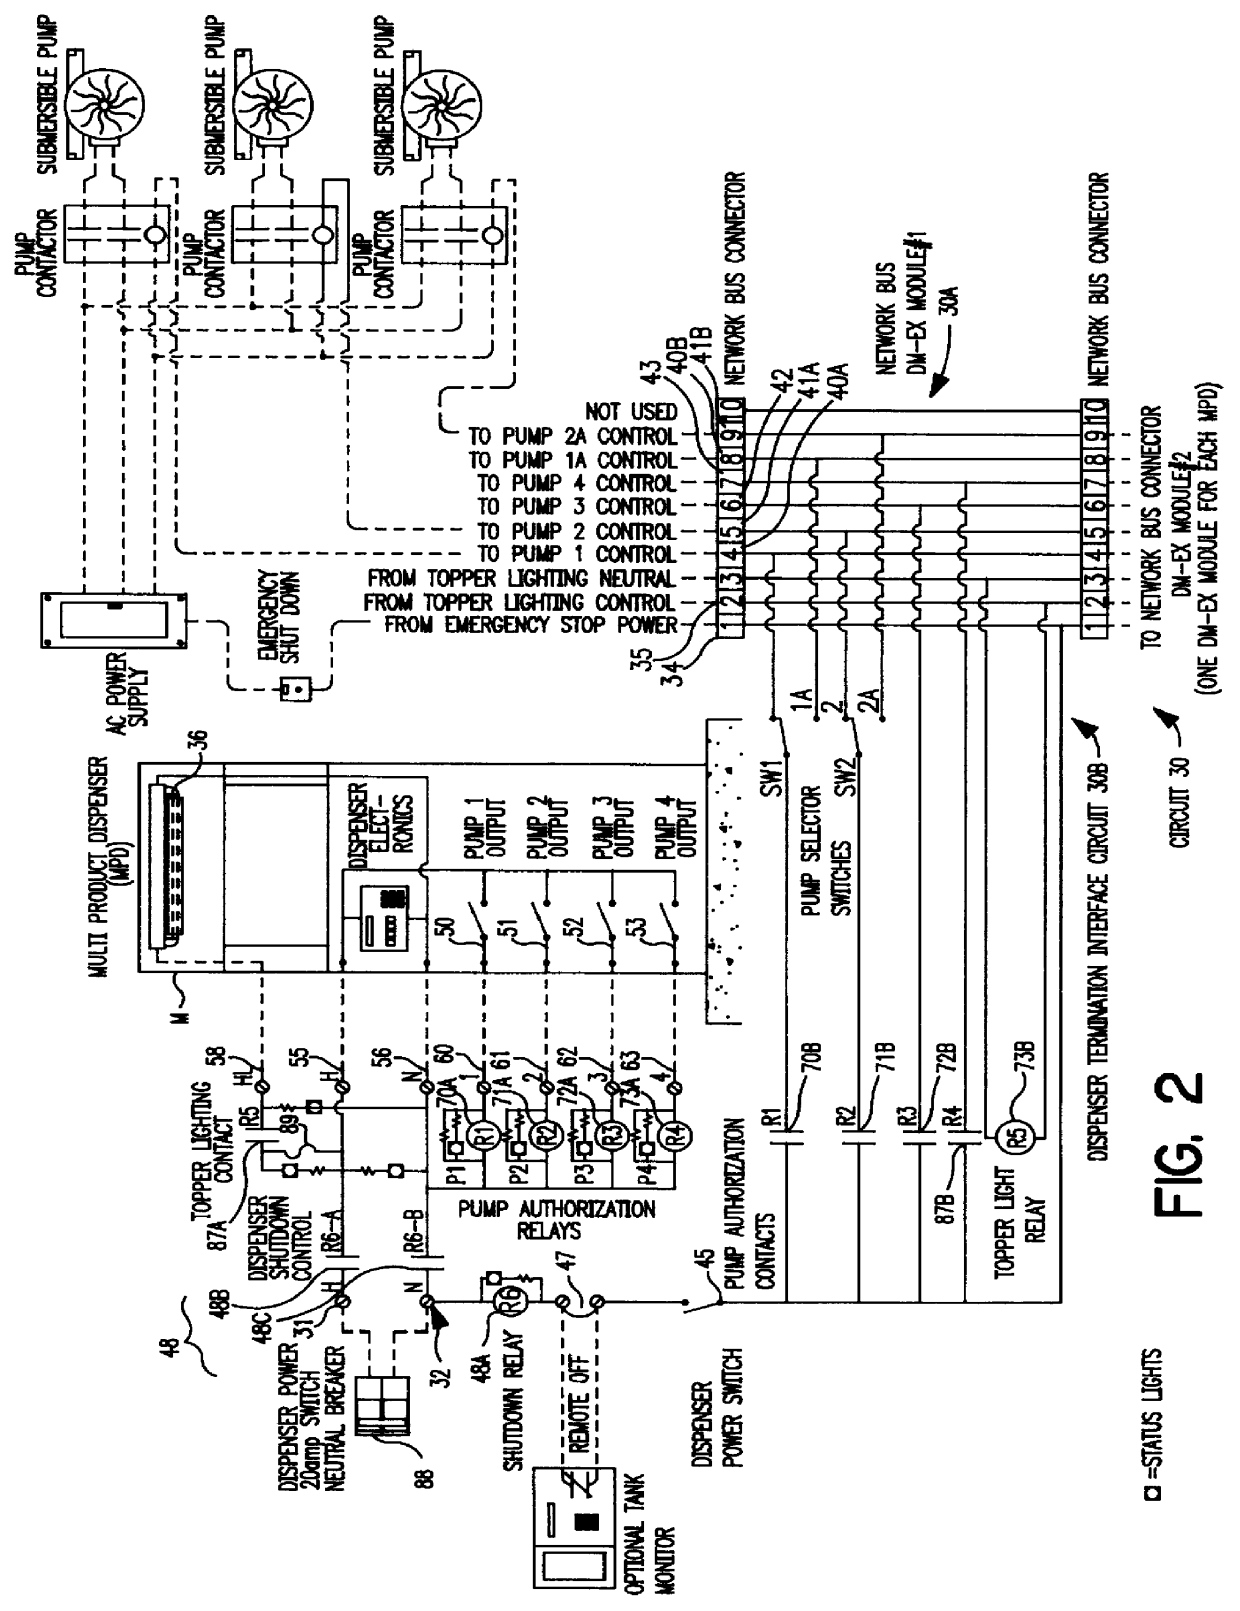 Control circuit for multi-product fuel dispenser